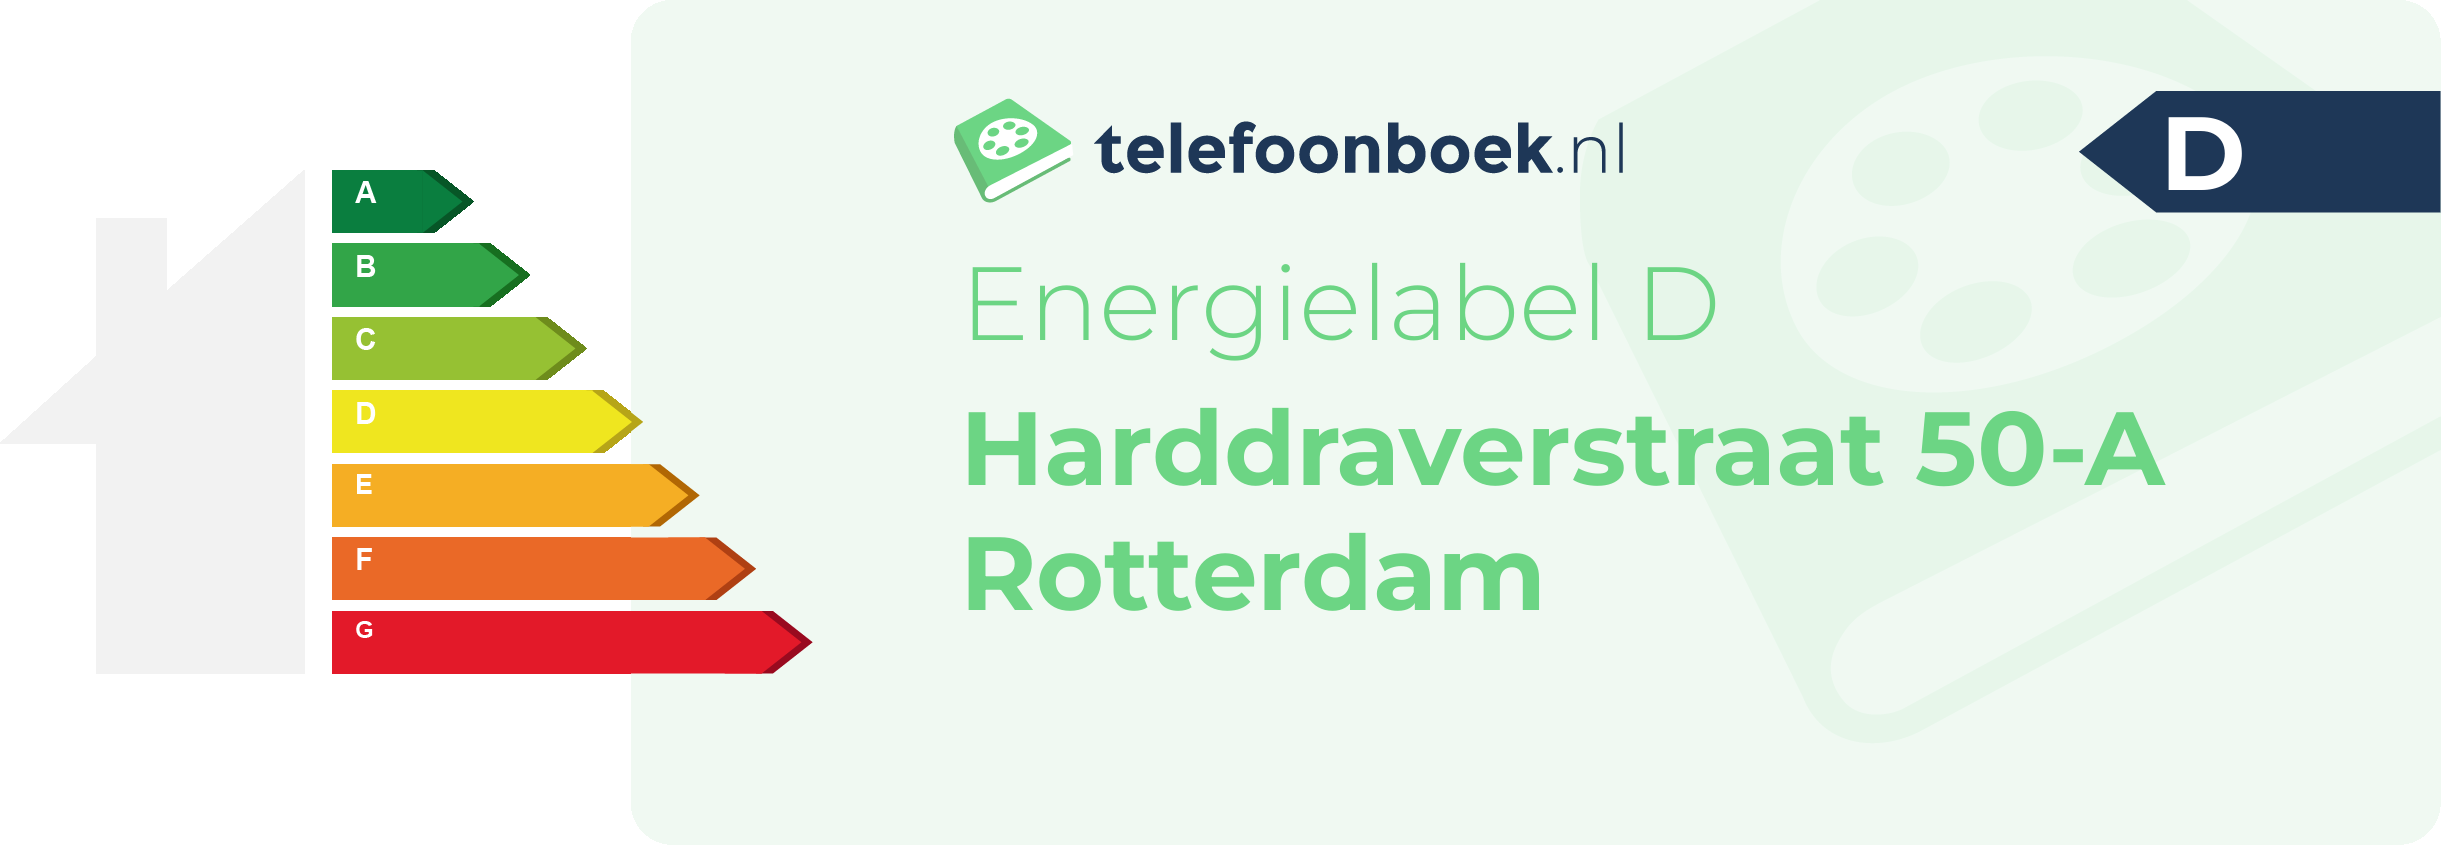 Energielabel Harddraverstraat 50-A Rotterdam